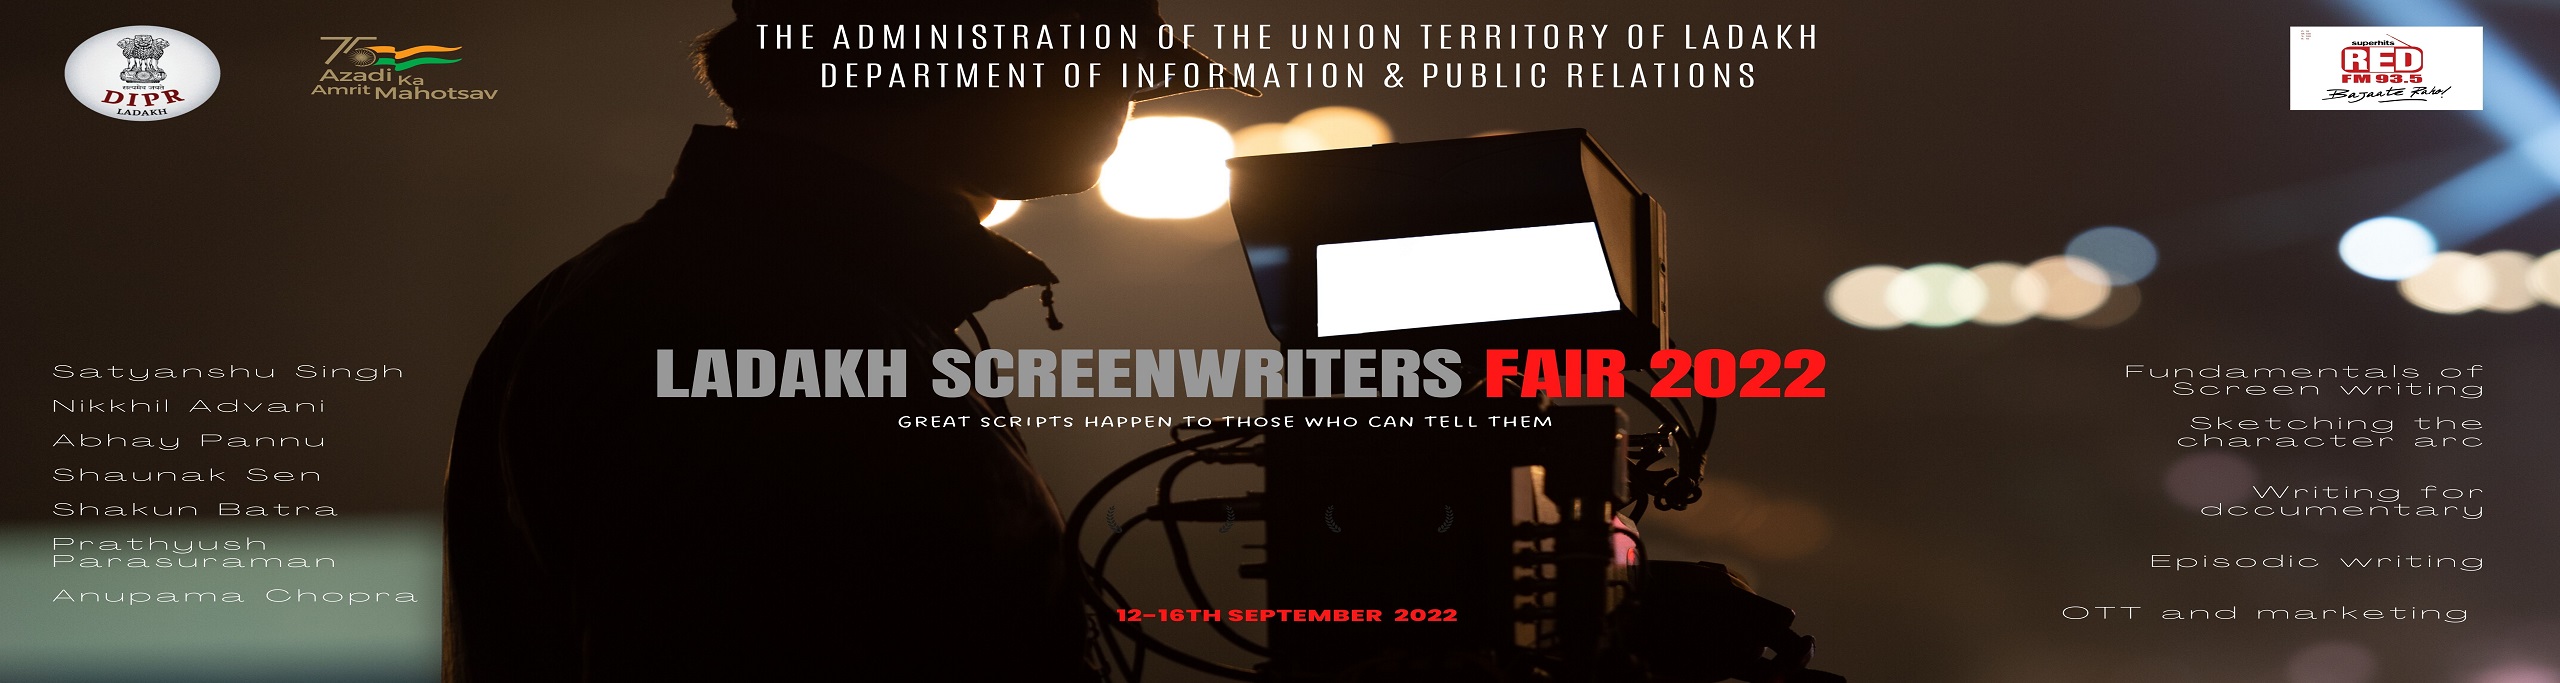 Ladakh Screenwriters Fair 2022